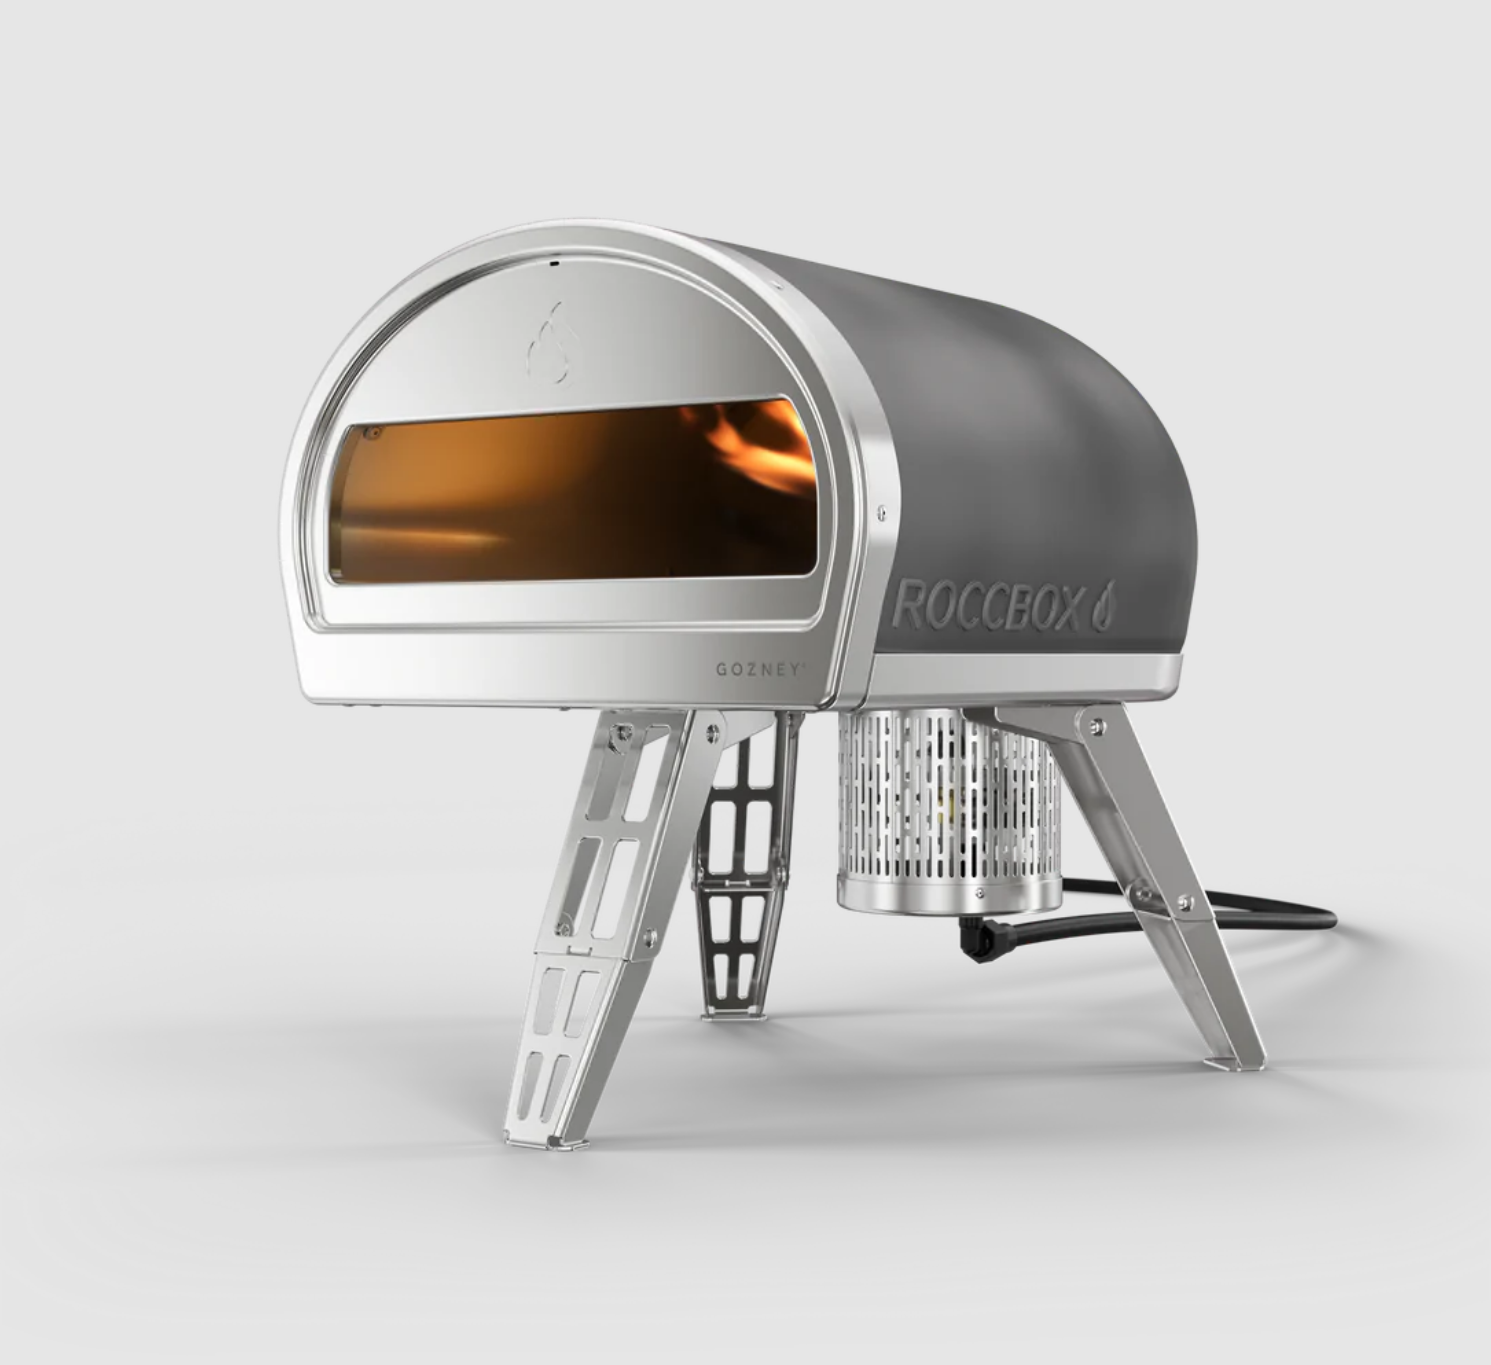 Gozney Roccbox Gas Burning Pizza Oven-Gray